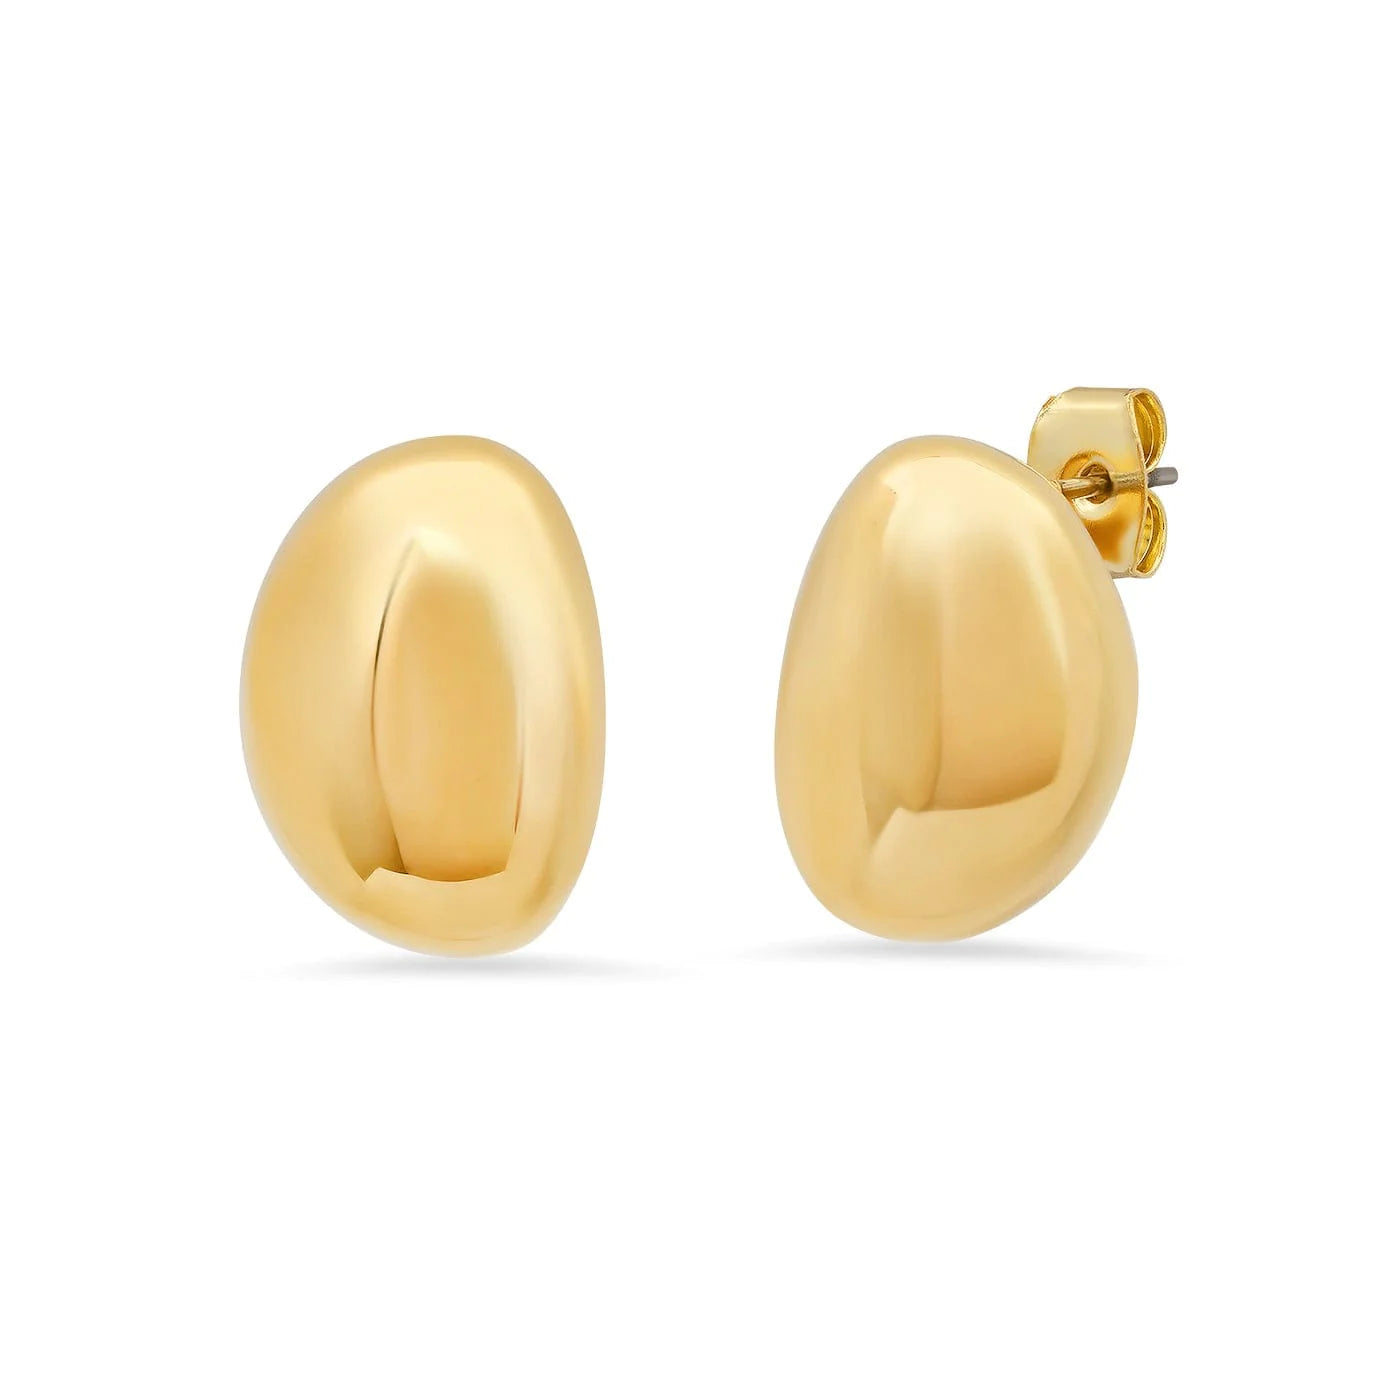 Hammered Gold Bean Earrings